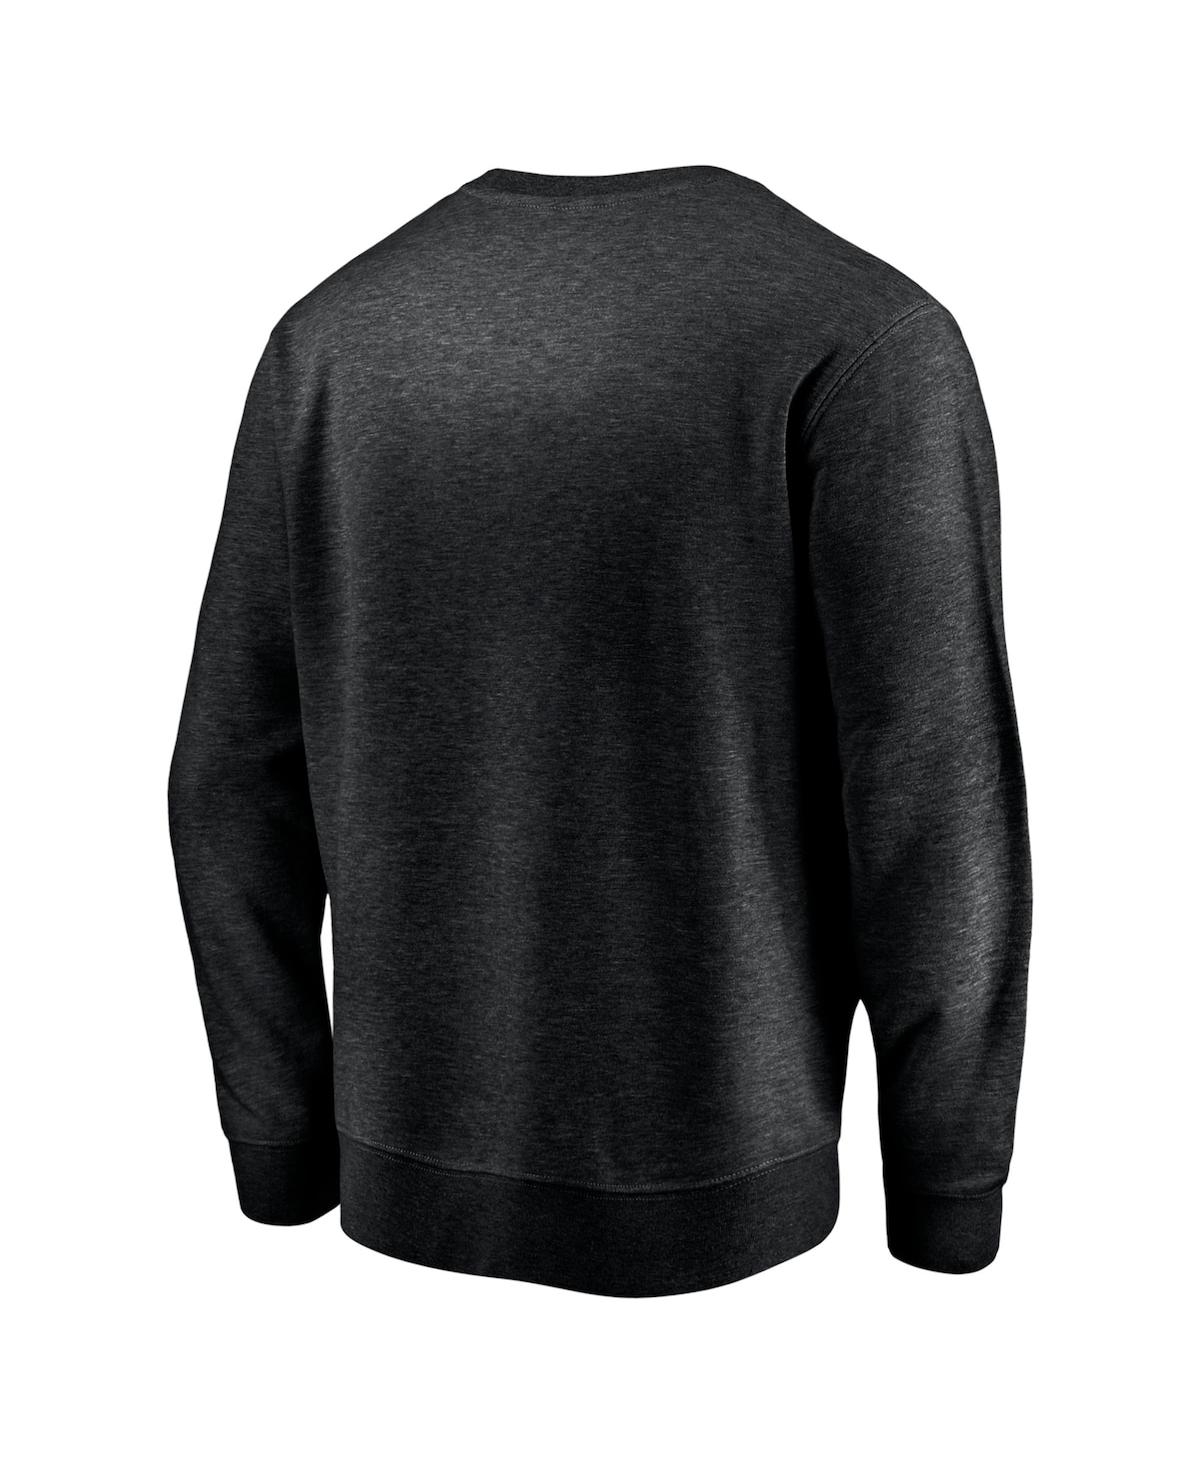 Shop Fanatics Men's  Black Toronto Raptors Game Time Arch Pullover Sweatshirt